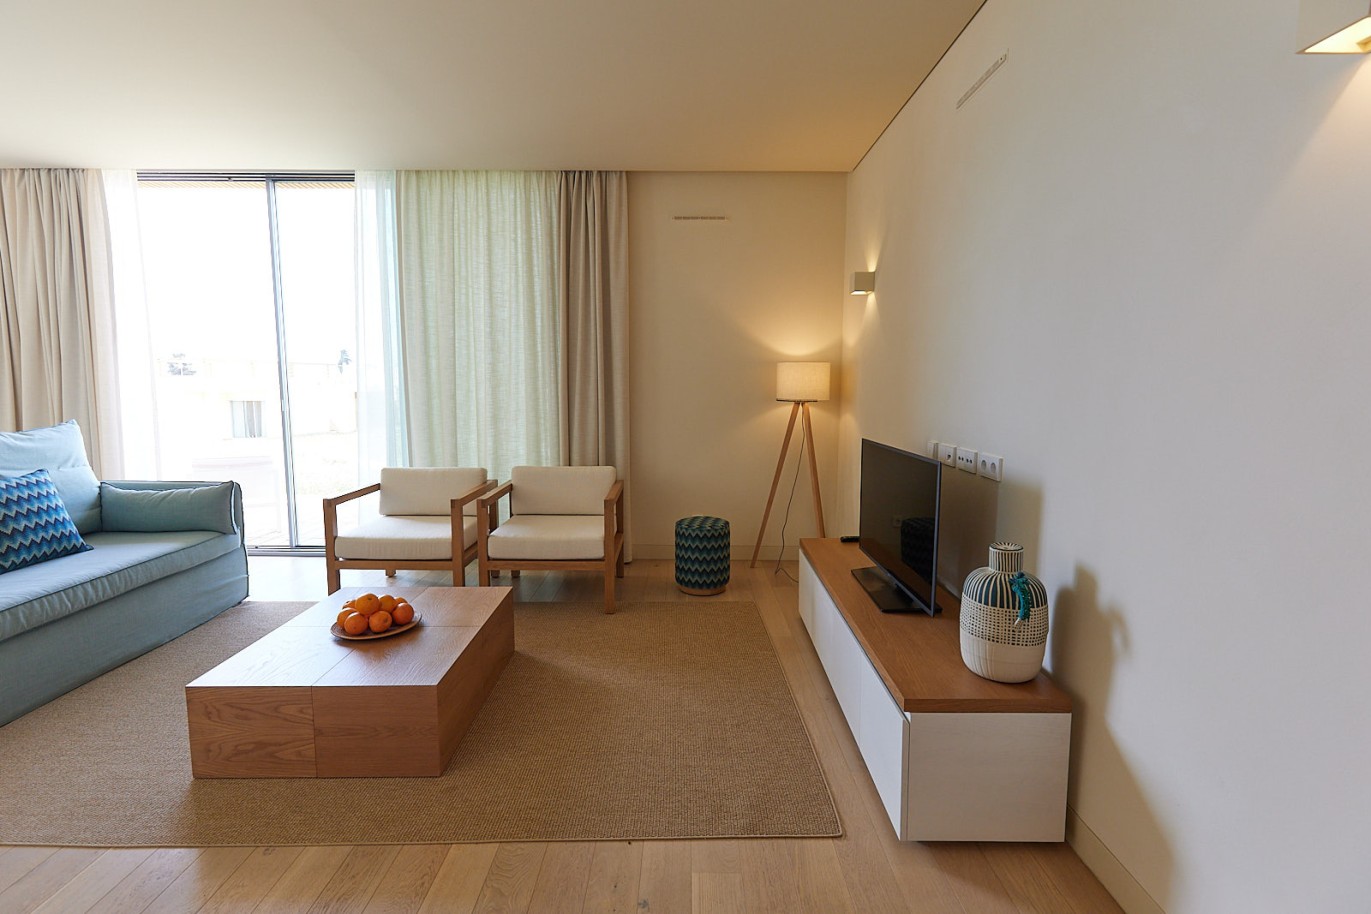 2 bedroom apartment in resort, for sale in Porches, Algarve_229234